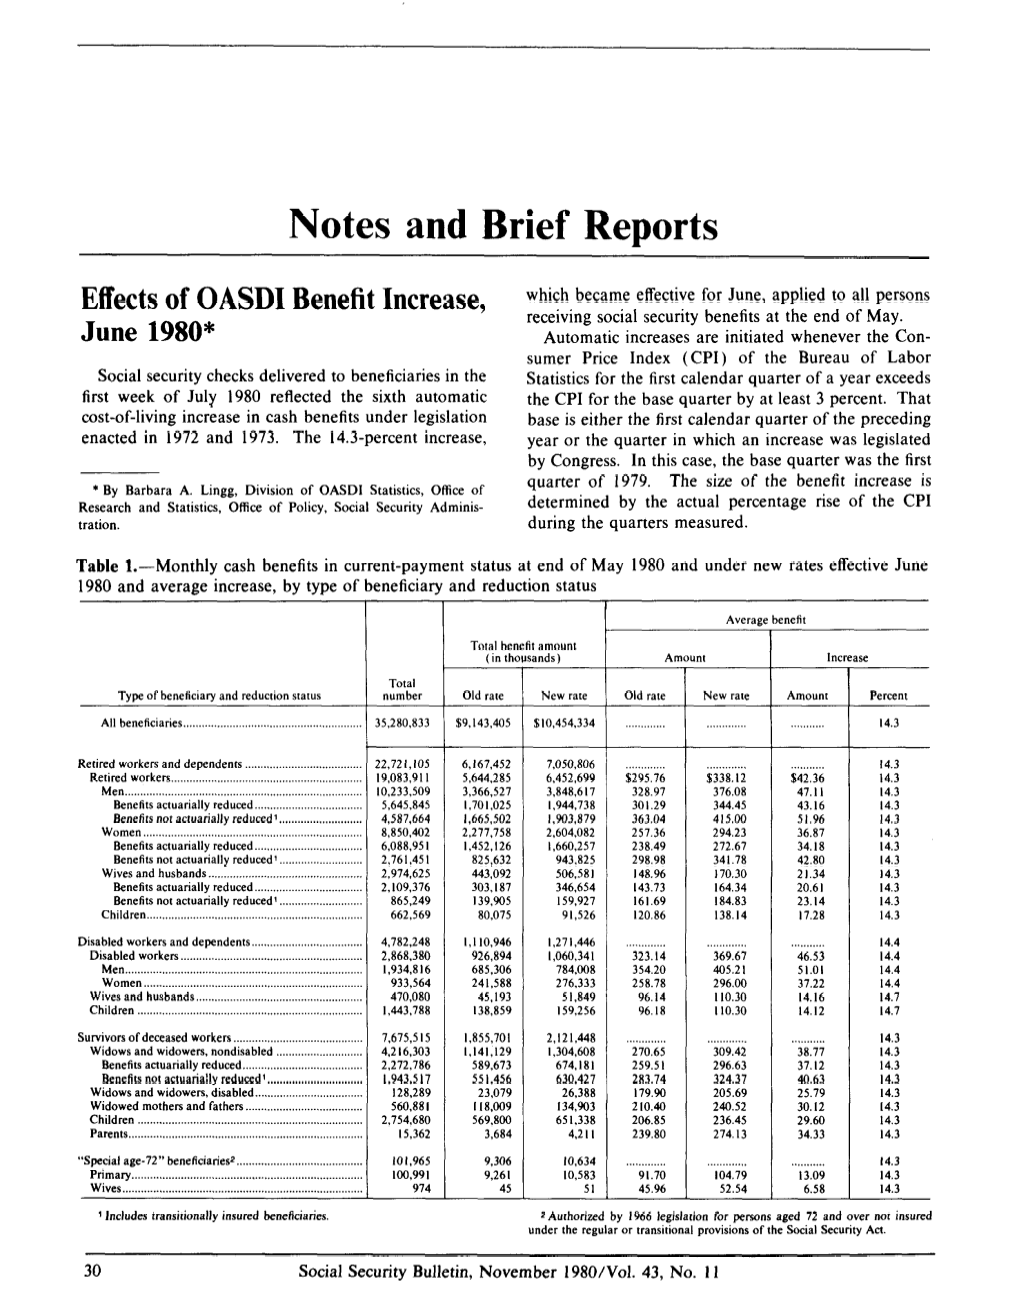 Effects of OASDI Benefit Increase, June 1980